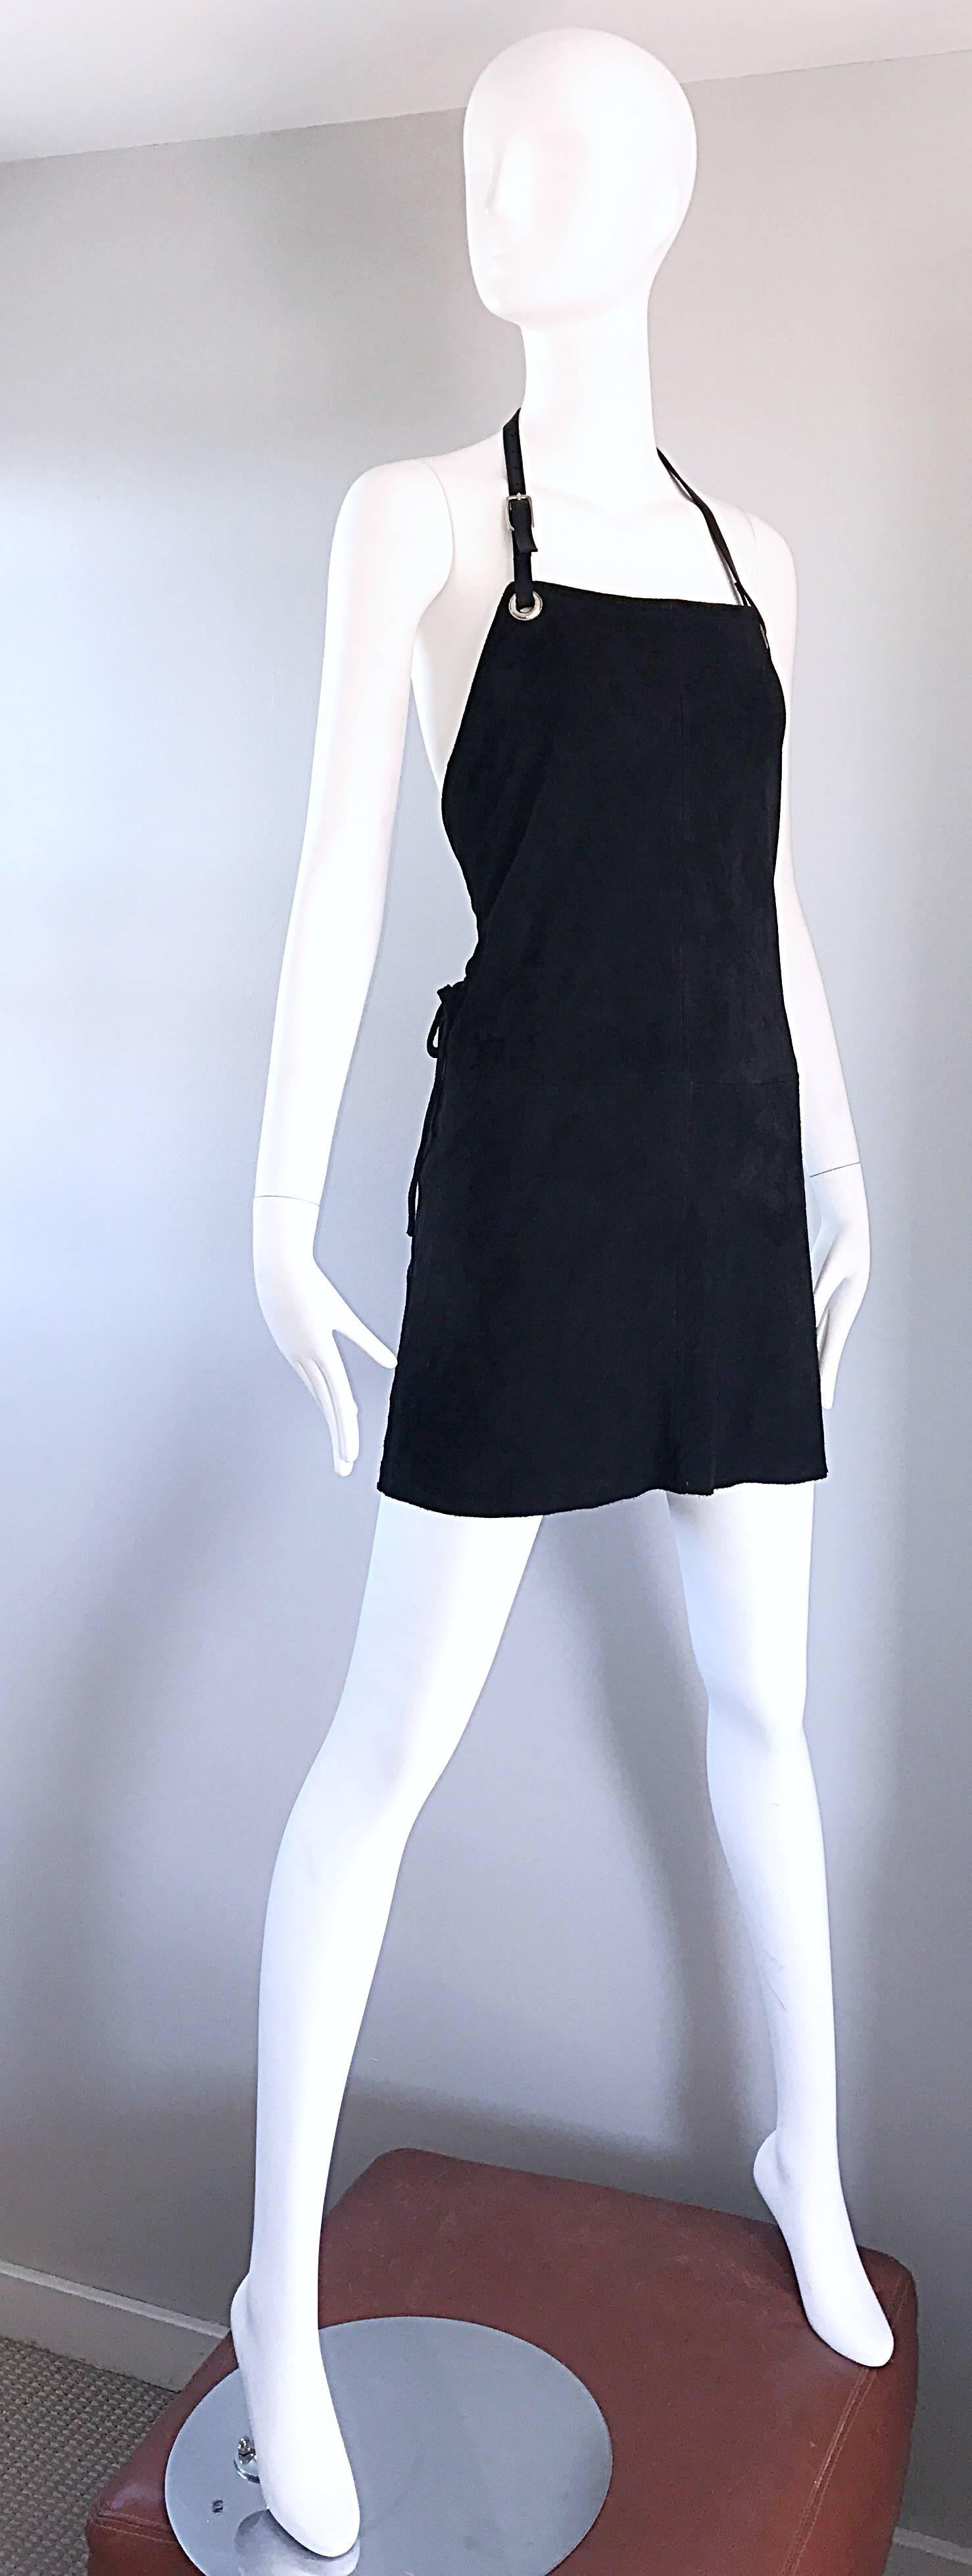 Women's Helmut Lang Early 1990s Rare Black Leather Suede Apron Halter Dress Vintage 90s For Sale